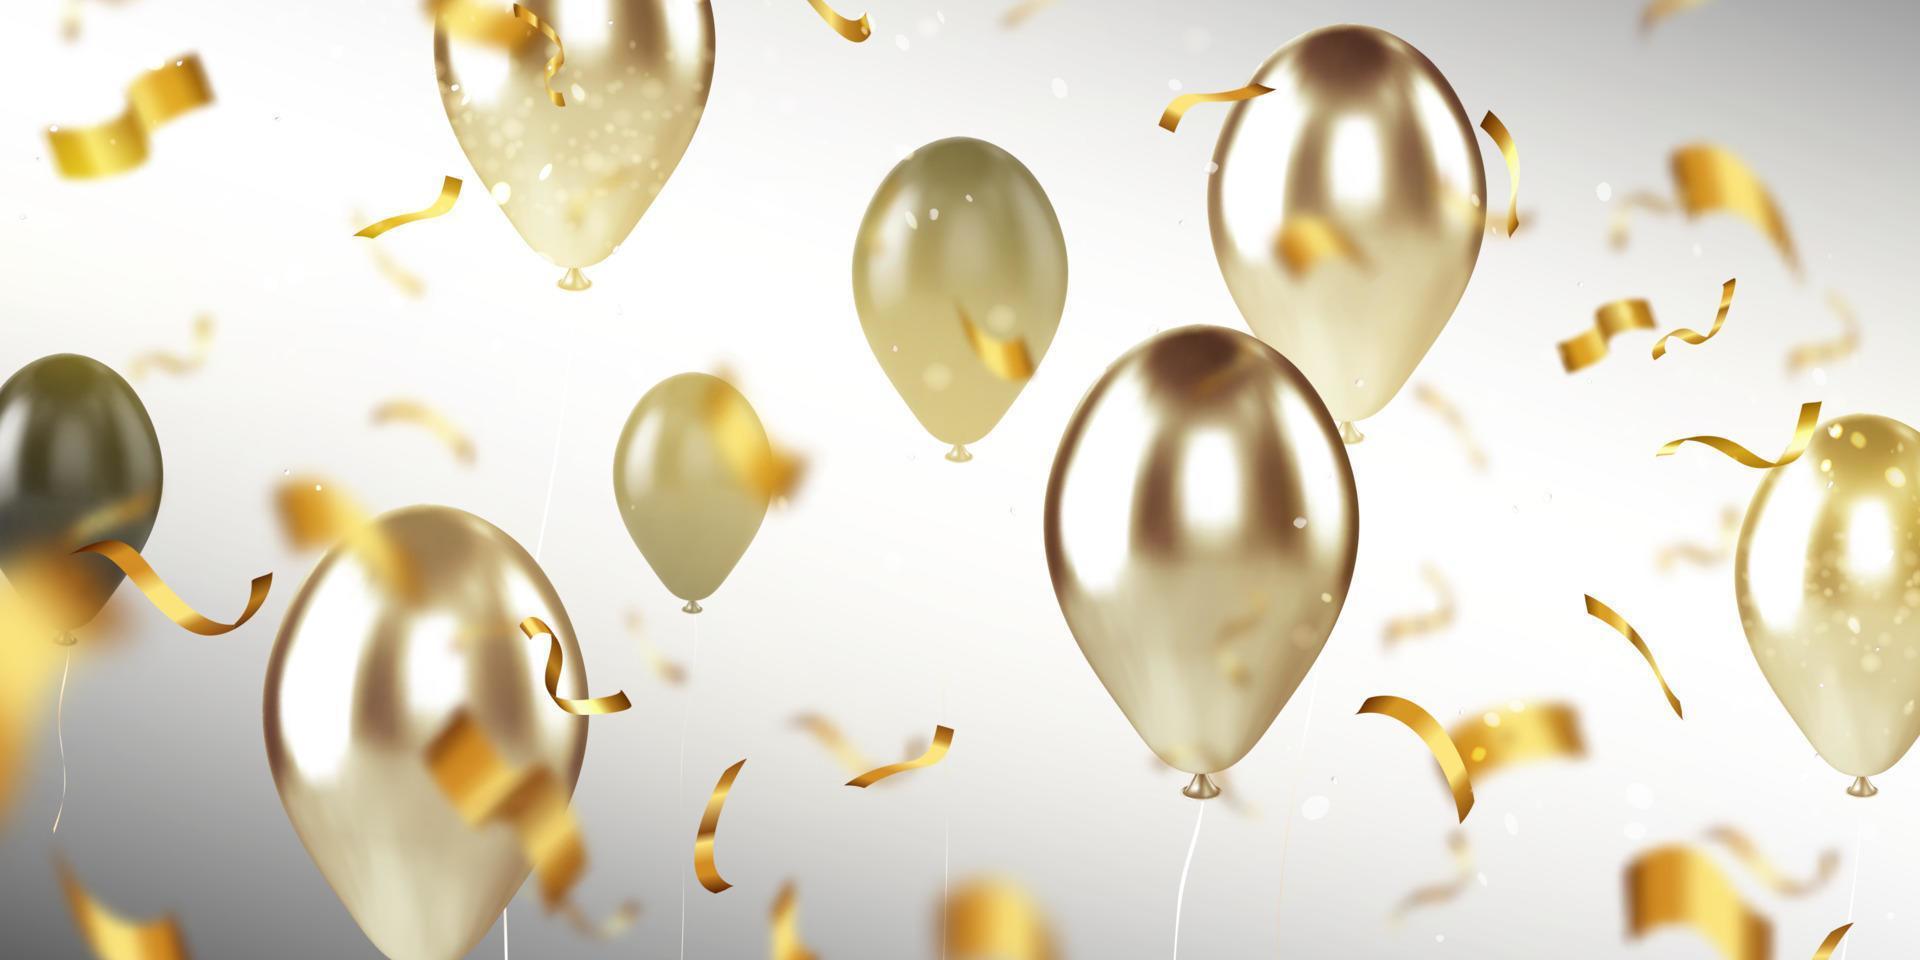 achtergrond met goud ballonnen en confetti, partij vector